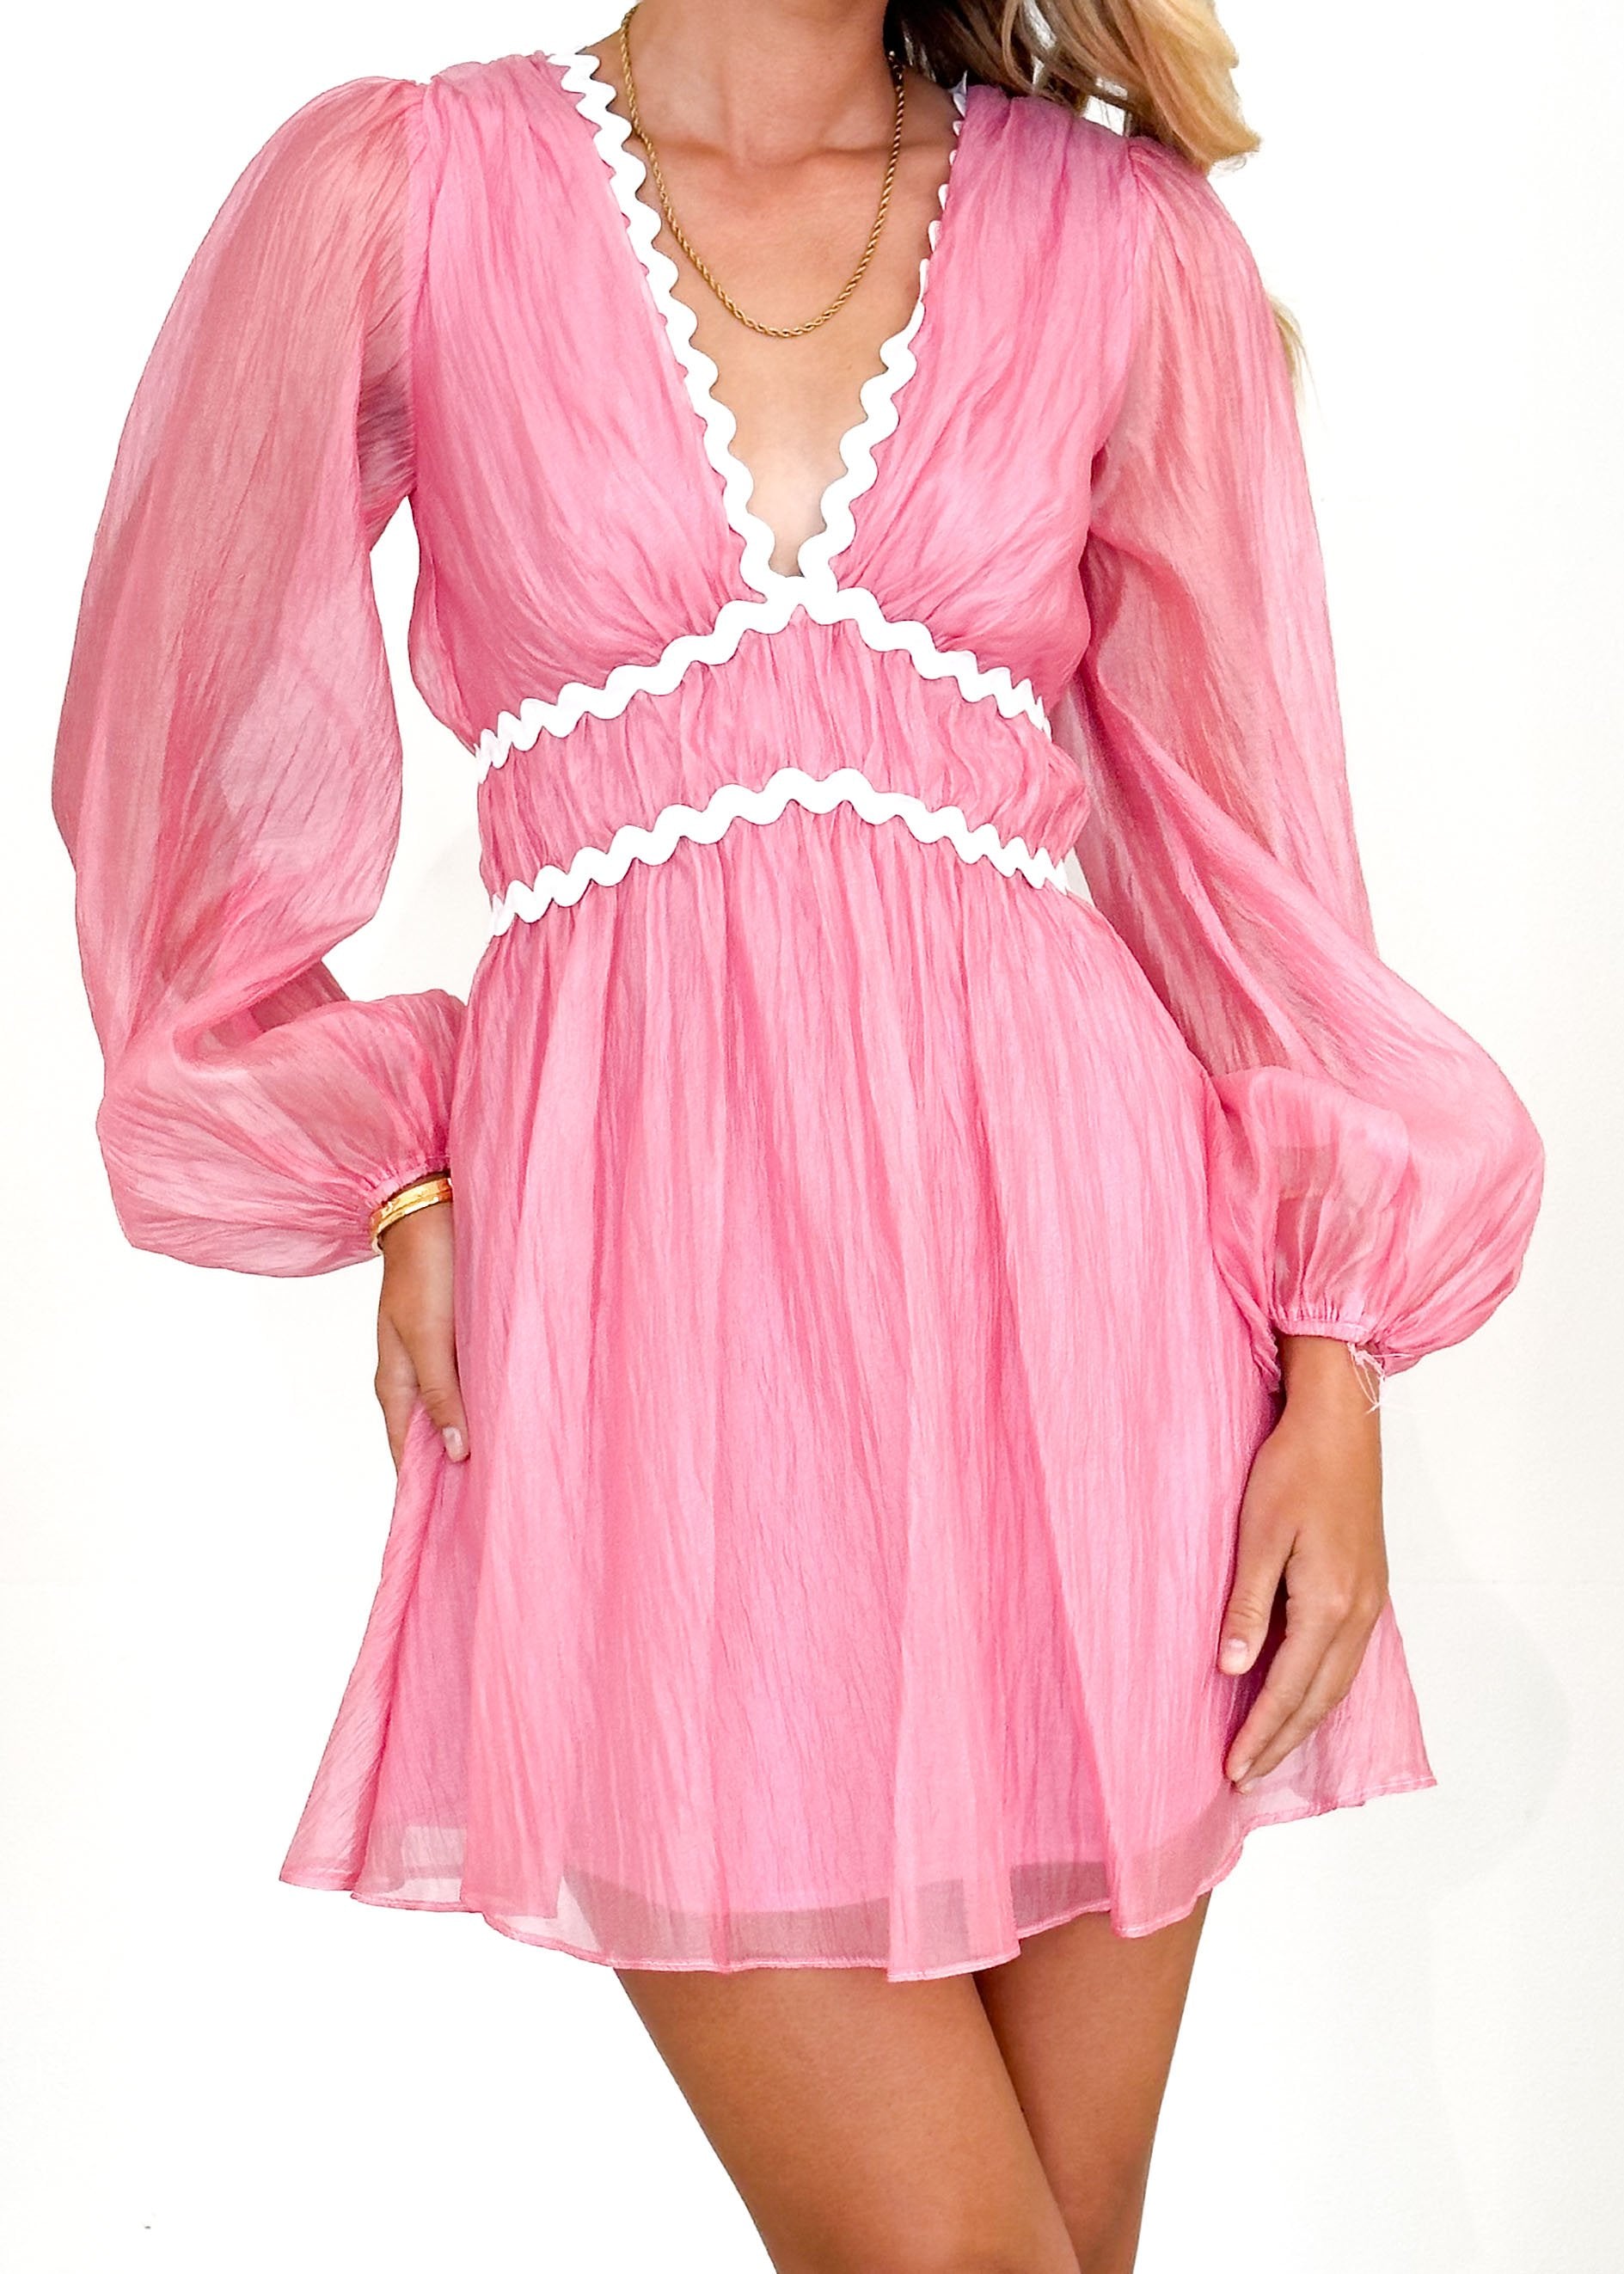 Kater Dress - Pink